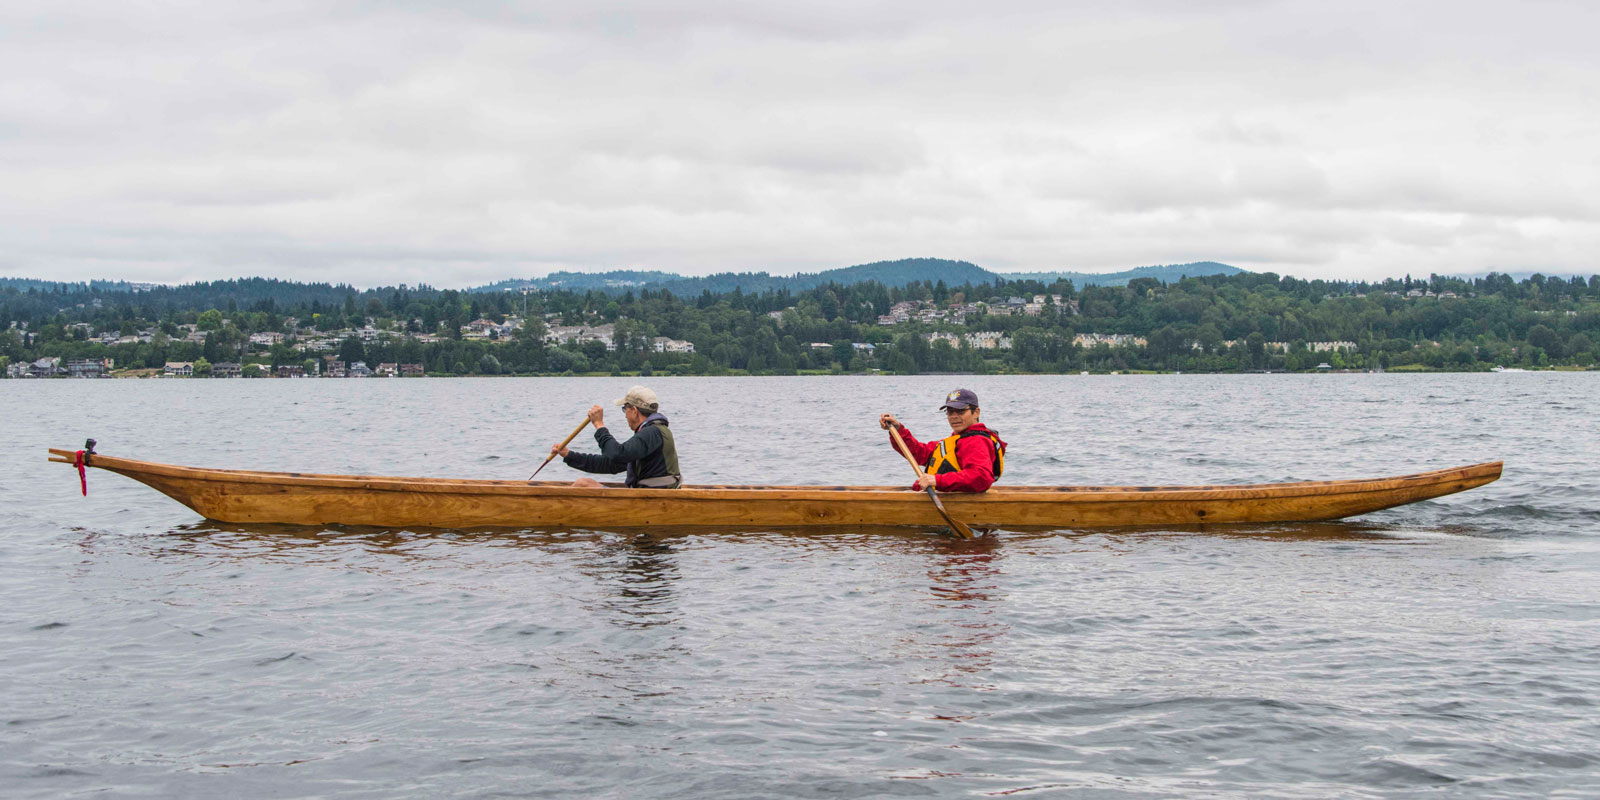 two men paddle the canoe through lake washington waters